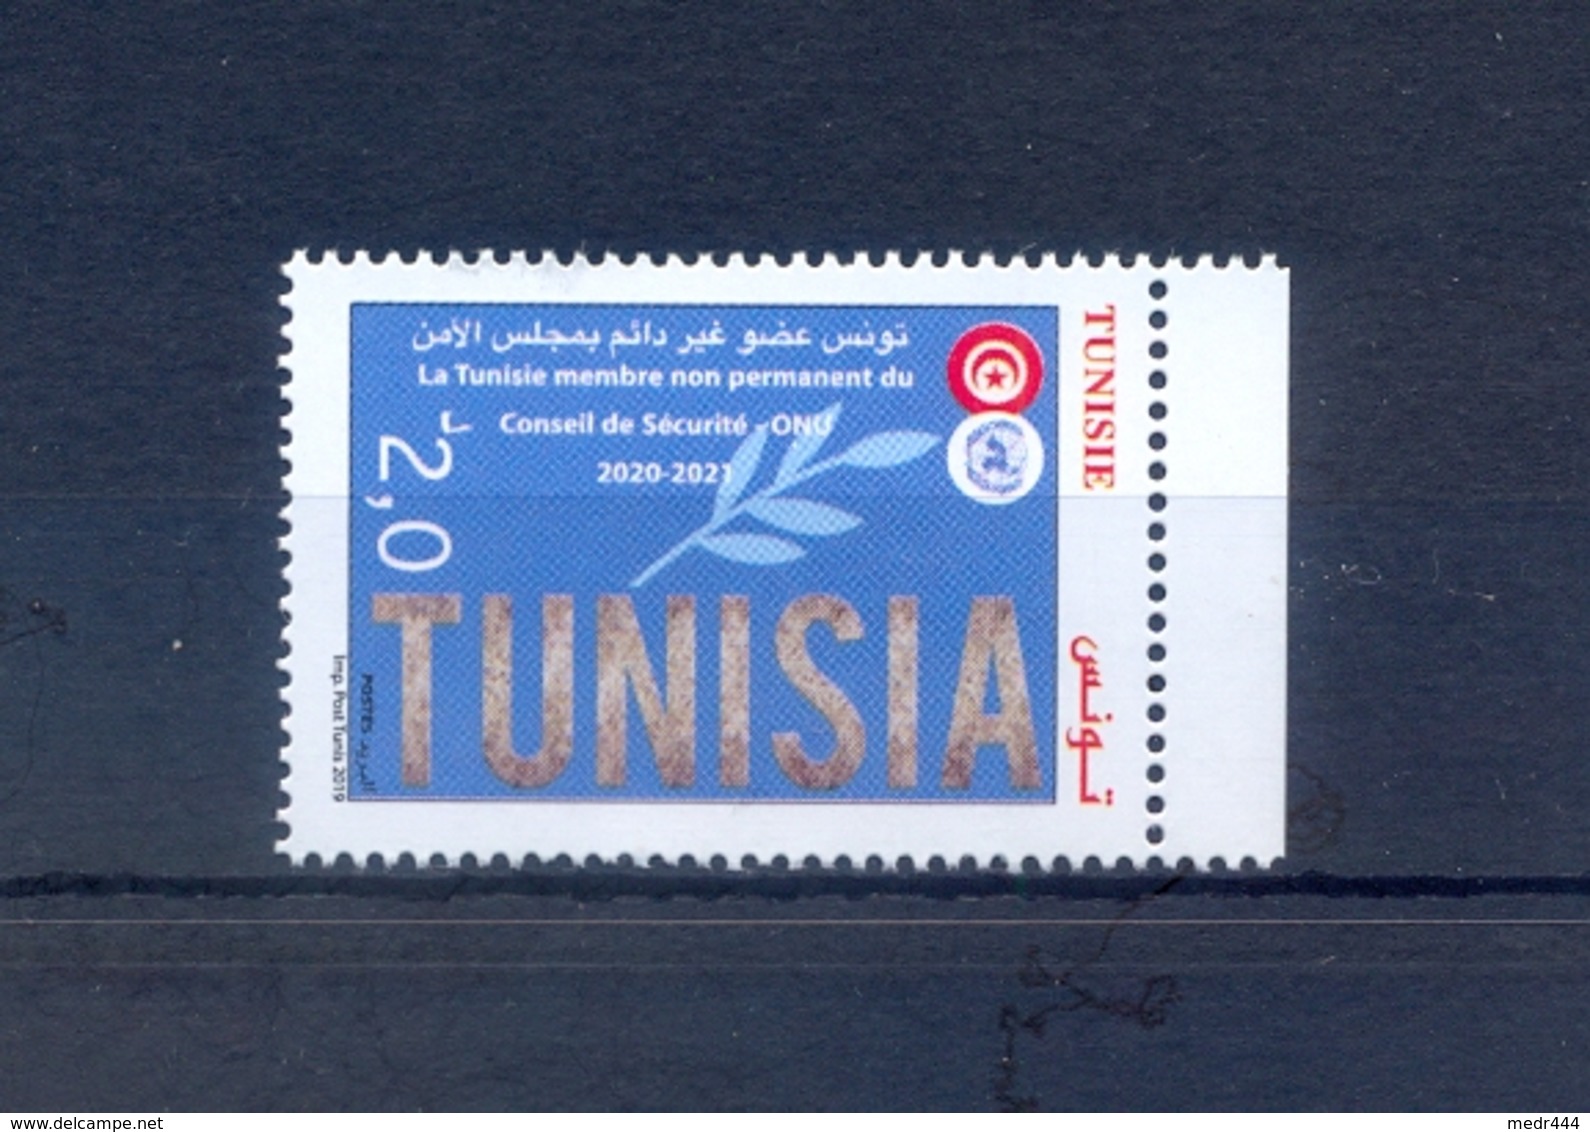 Tunisia/Tunisie 2019 - Stamp - Tunisia Non-permanent Member Of The United Nations Security Council - MNH** - Tunisia